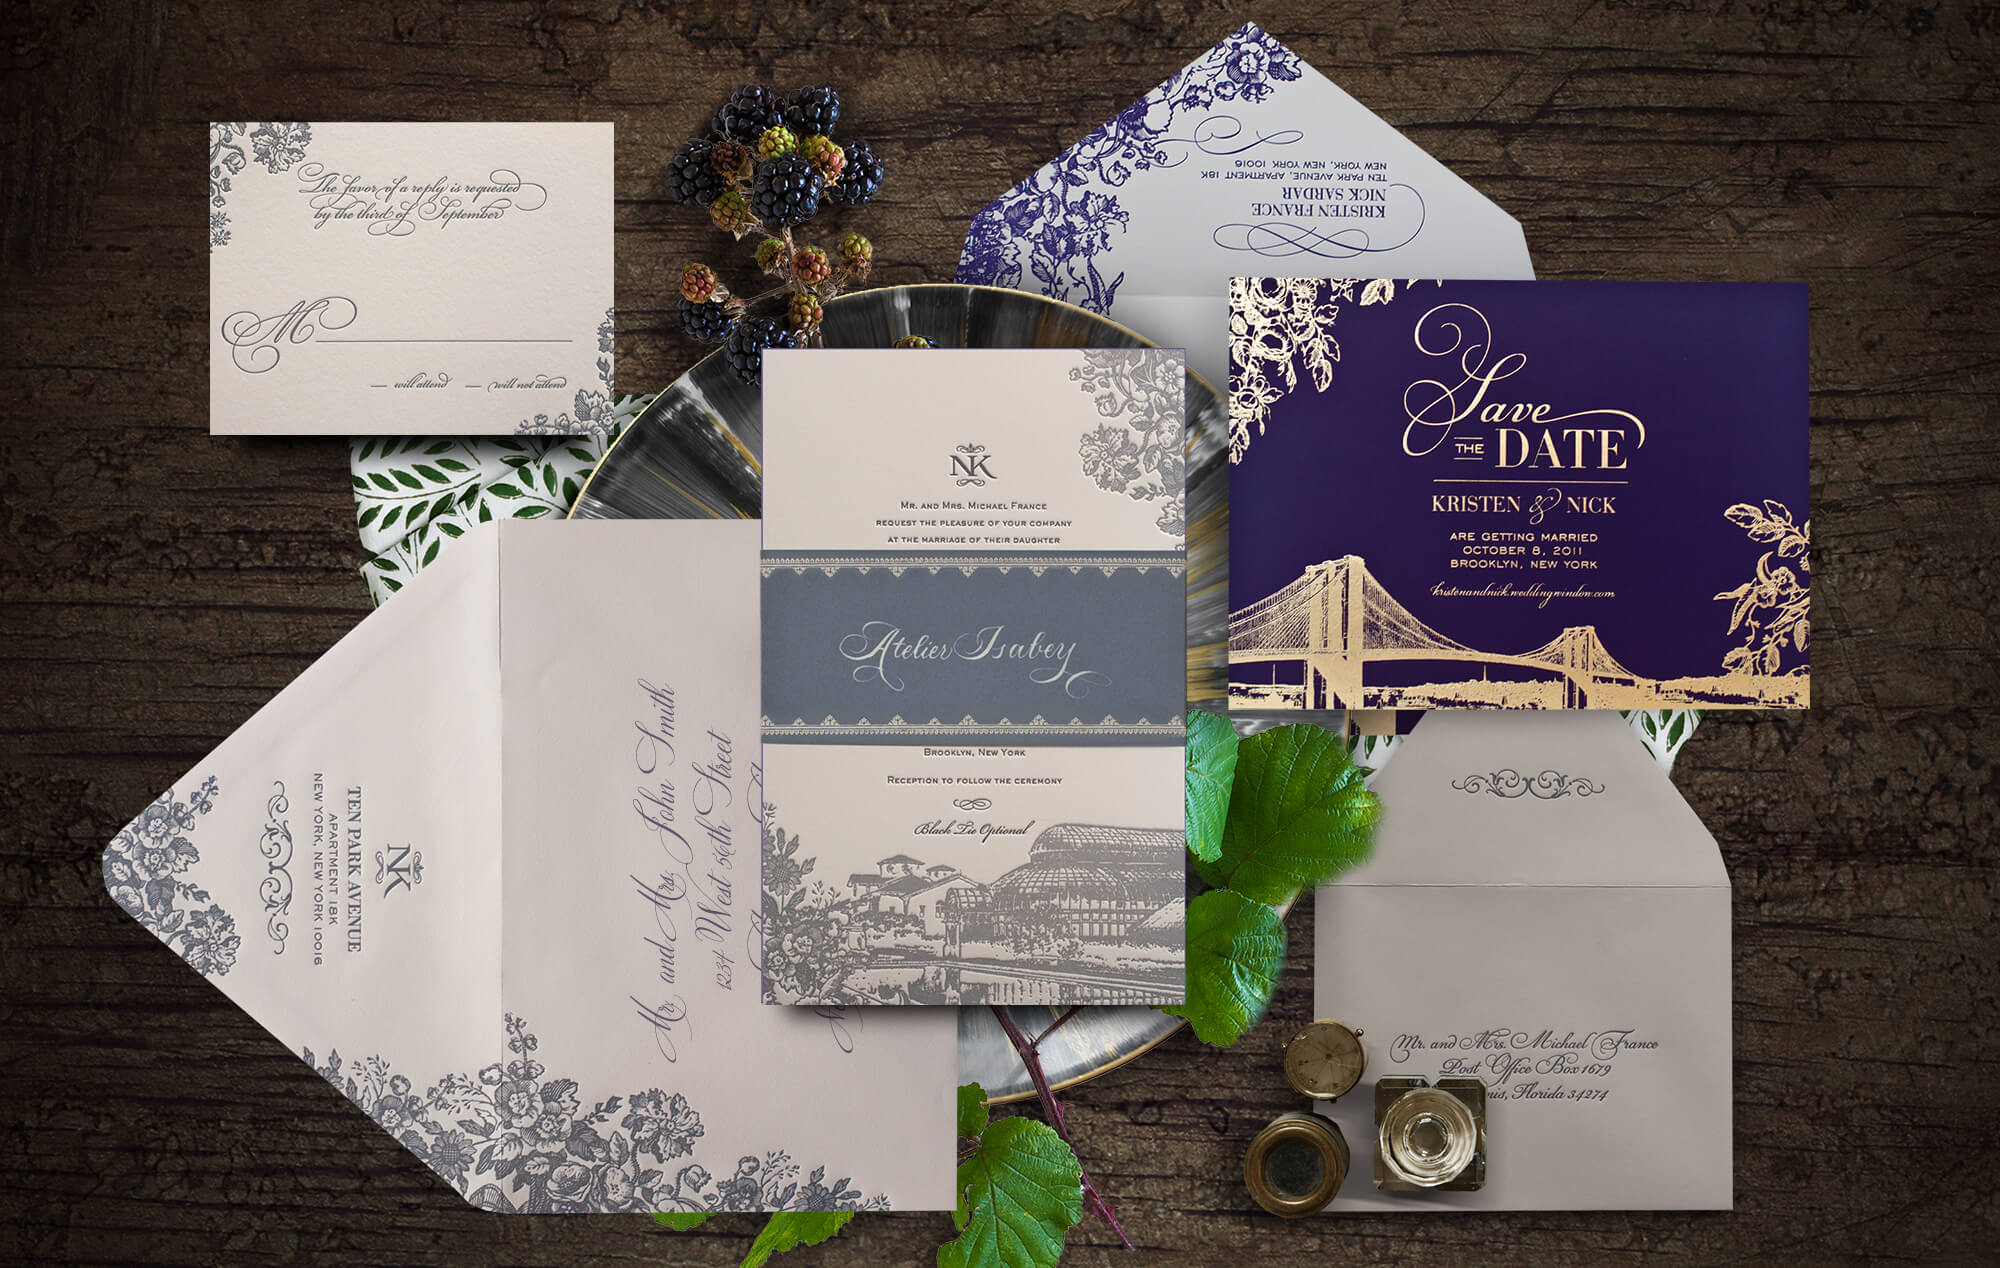 Brooklyn Botanic Garden wedding invitation